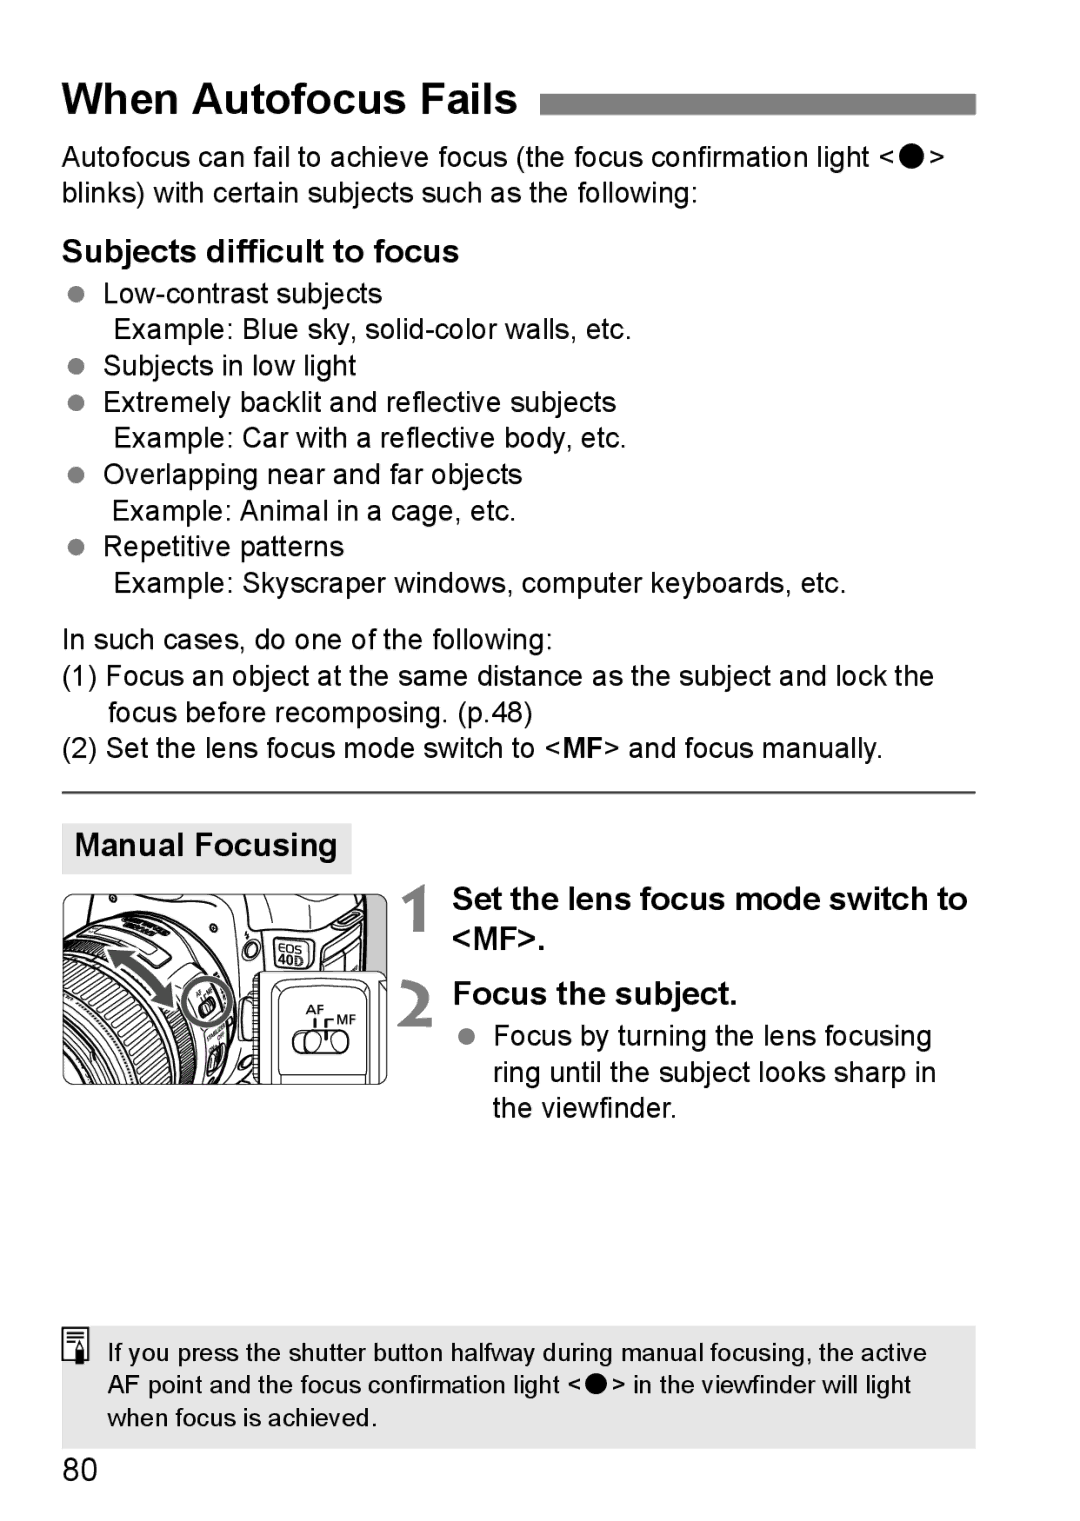 Canon EOS40D instruction manual When Autofocus Fails, Subjects difficult to focus 